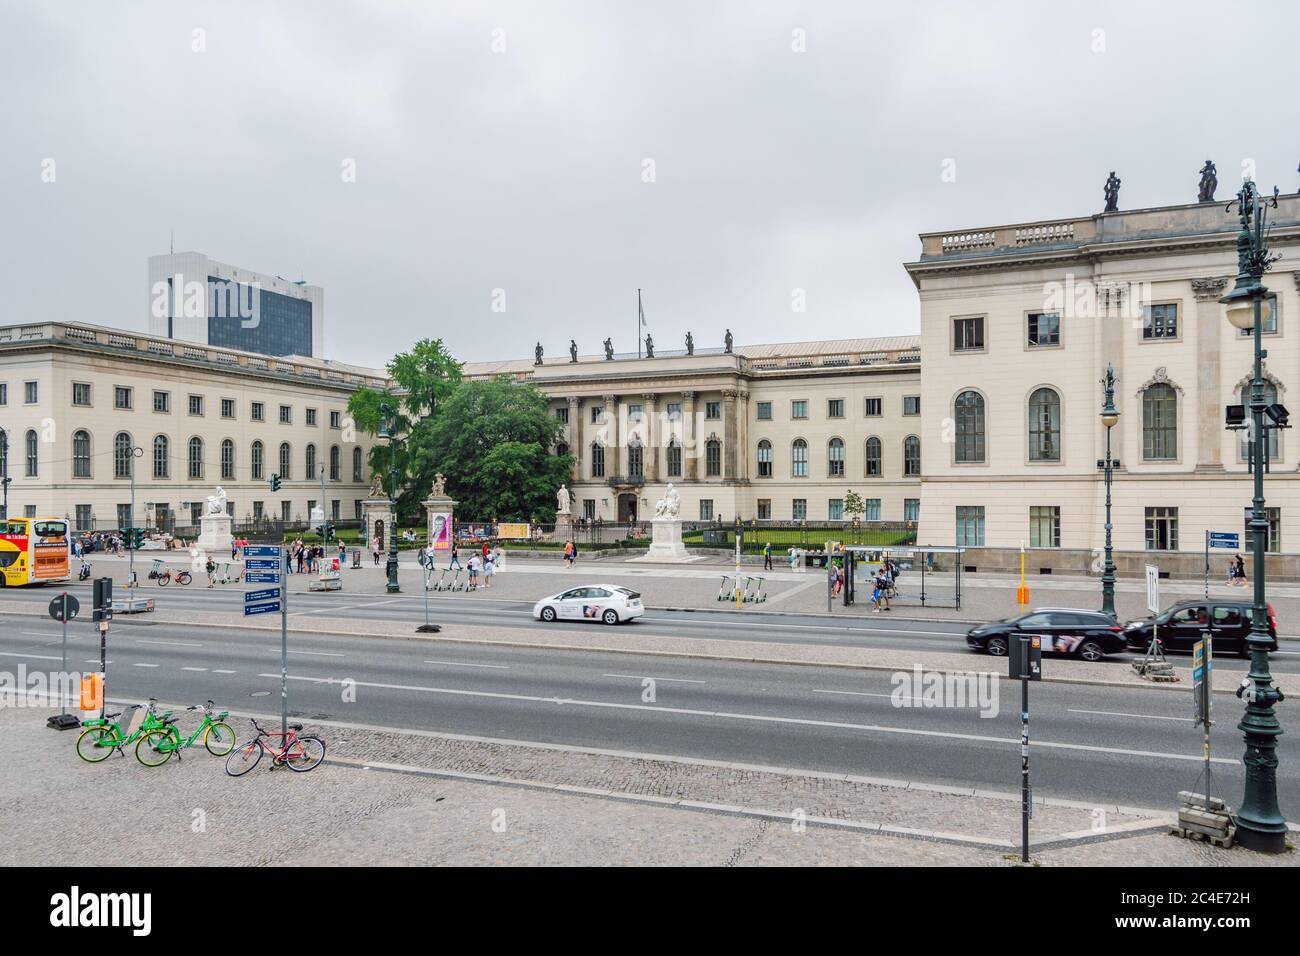 Main building of the Humboldt university in Berlin at the boulevard Unter den Linden. Stock Photo